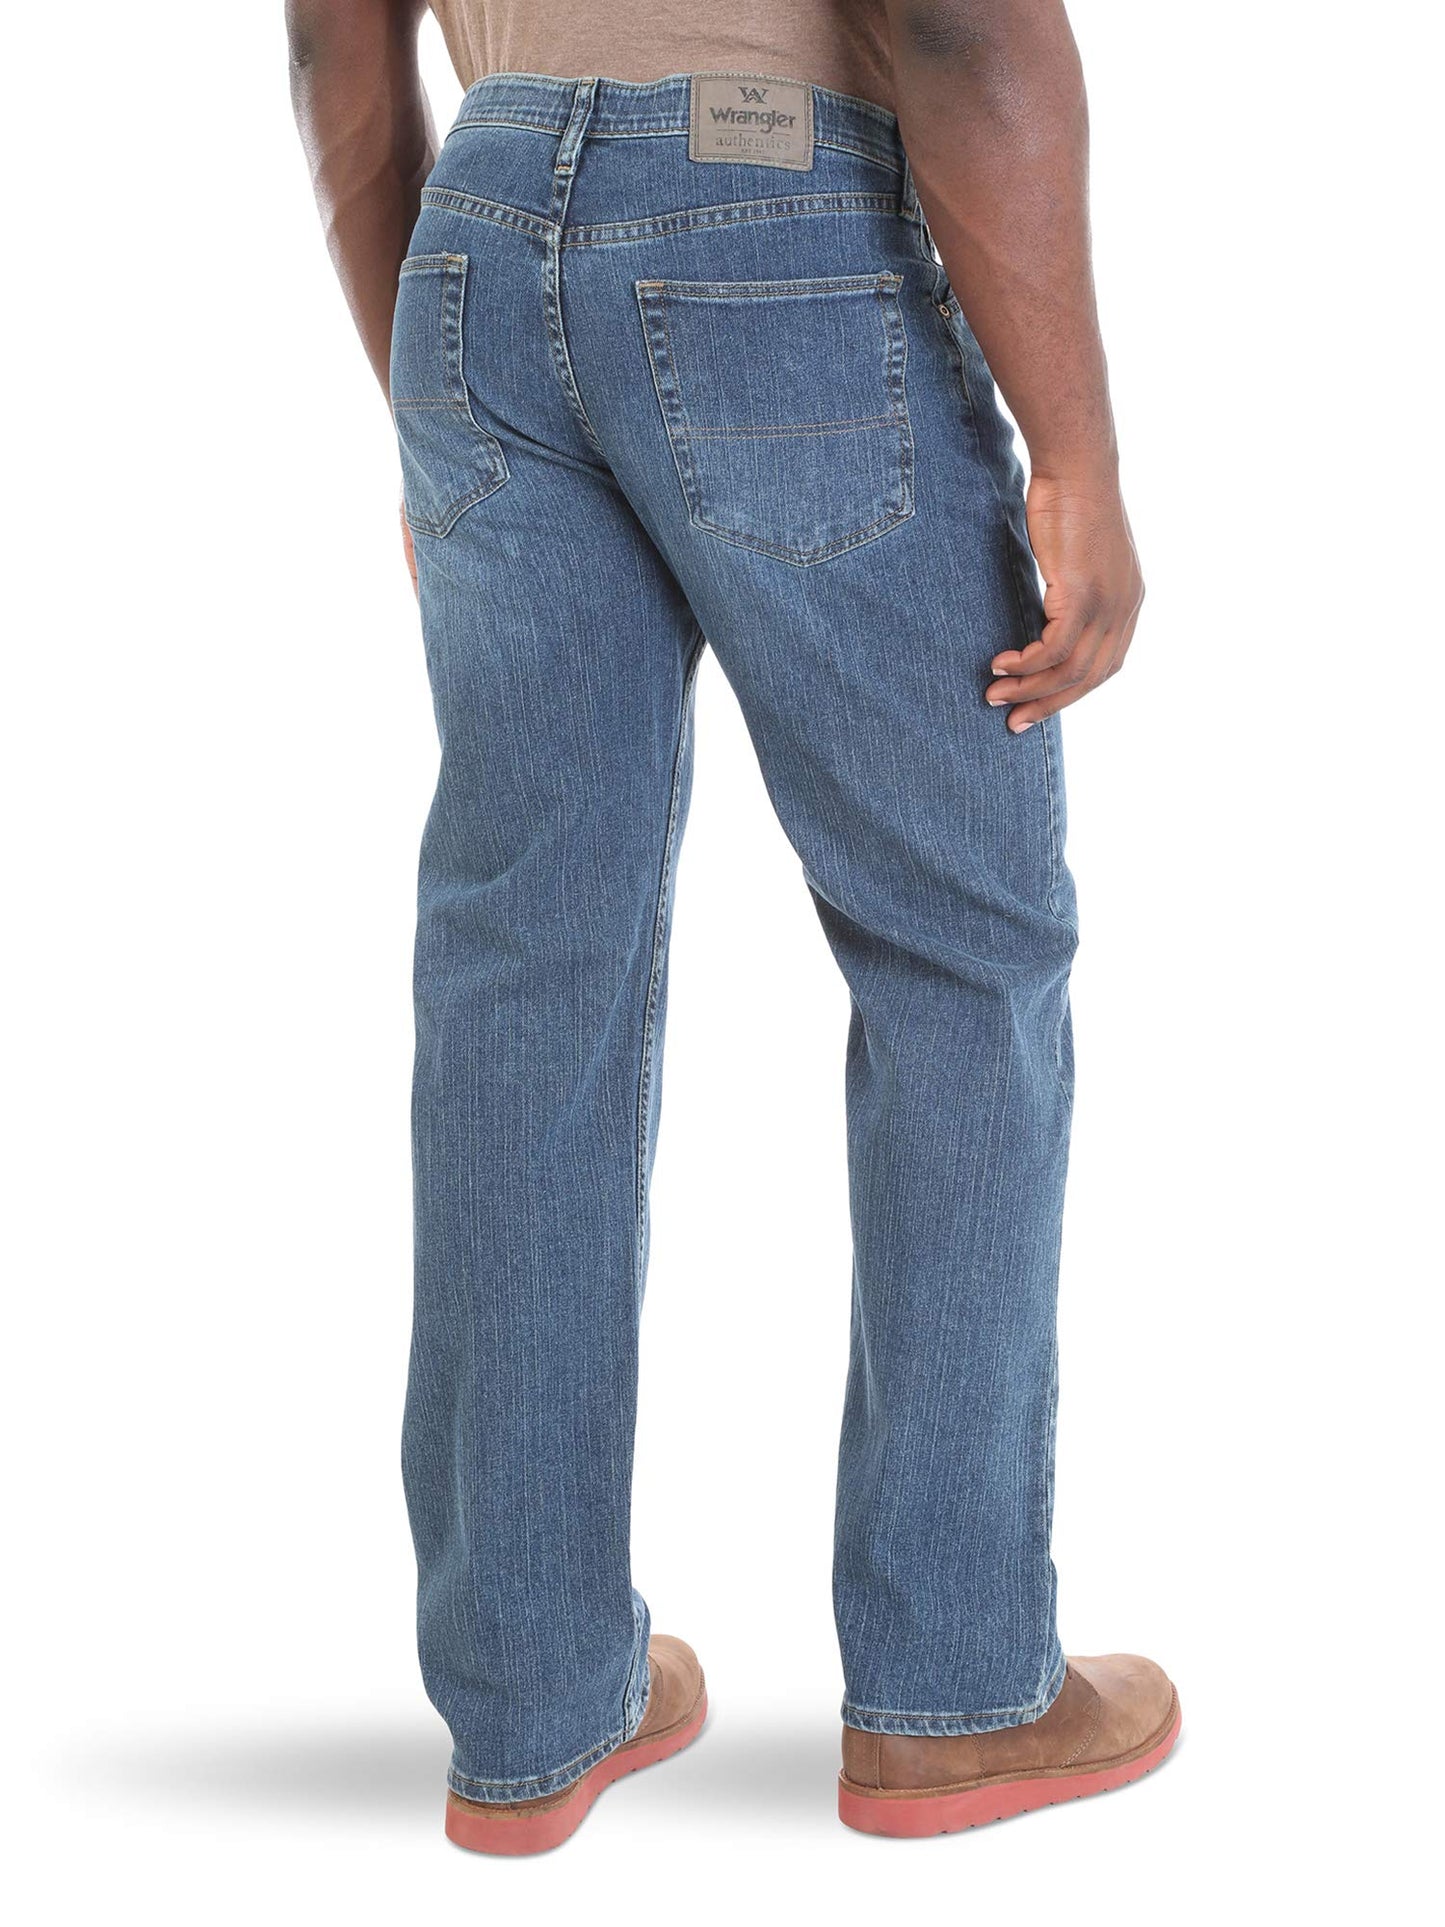 Wrangler Authentics Men's Regular Fit Comfort Flex Waist Jean, Blue Ocean, 36W x 32L